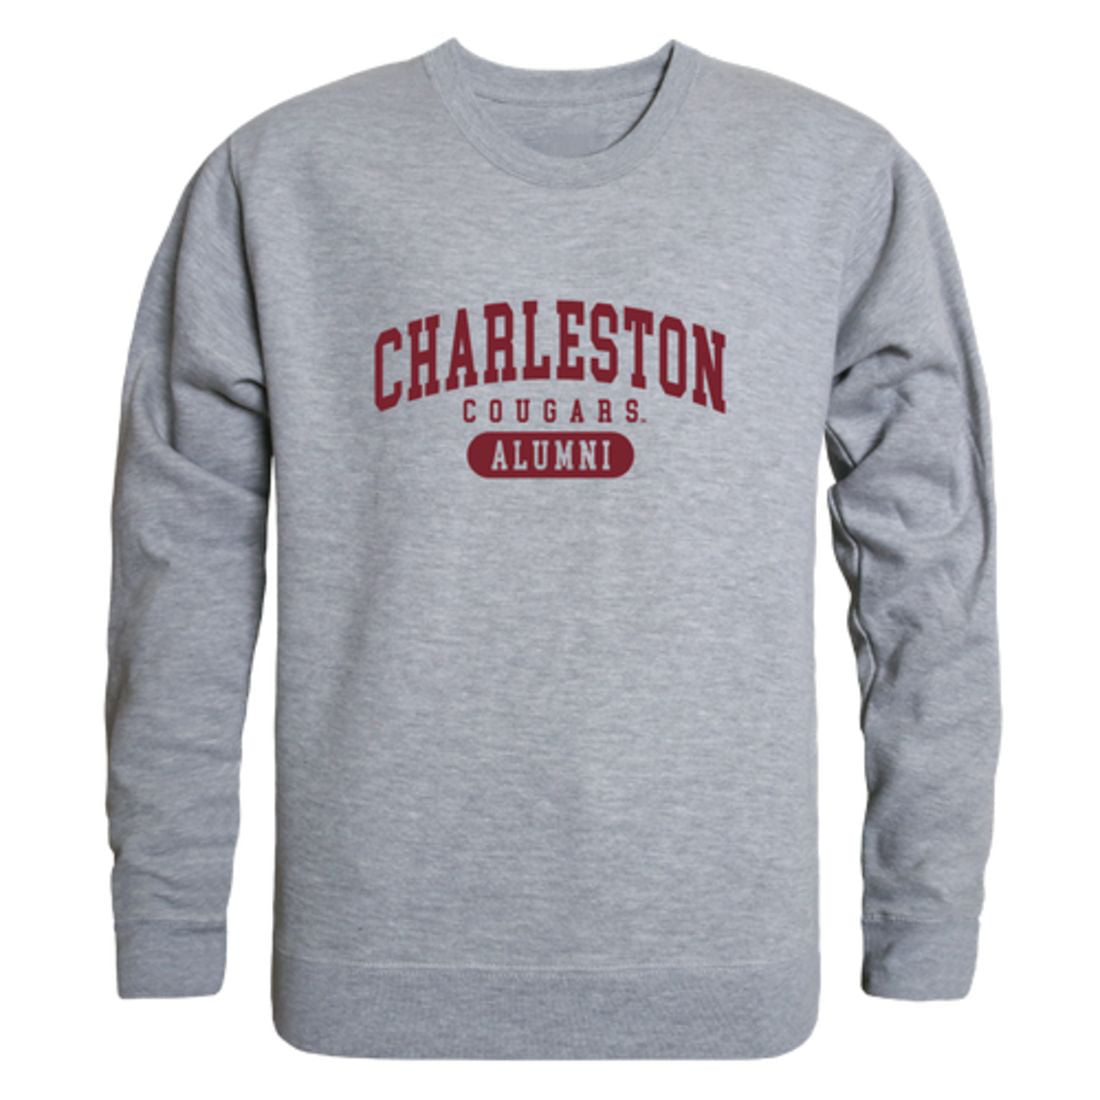 W Republic COFC College of Charleston Campus Crewneck Pullover Sweatshirt Sweater Black 